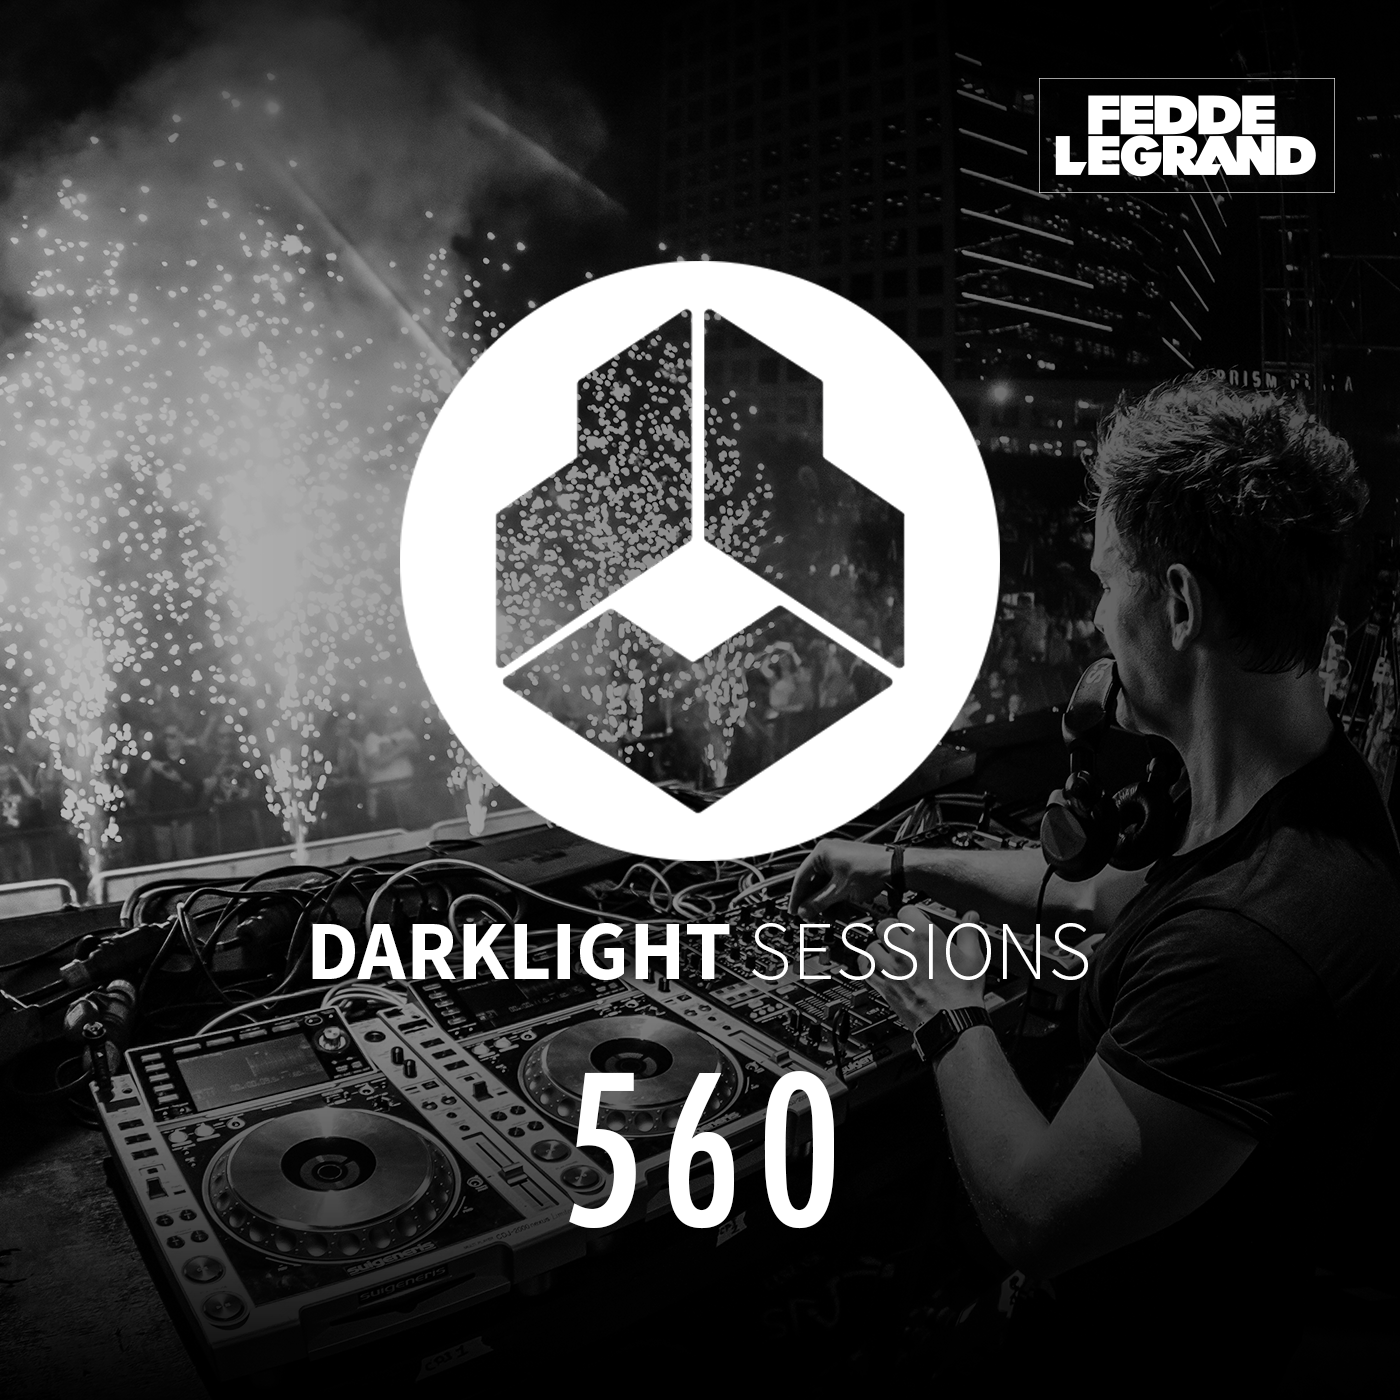 Darklight Sessions 560